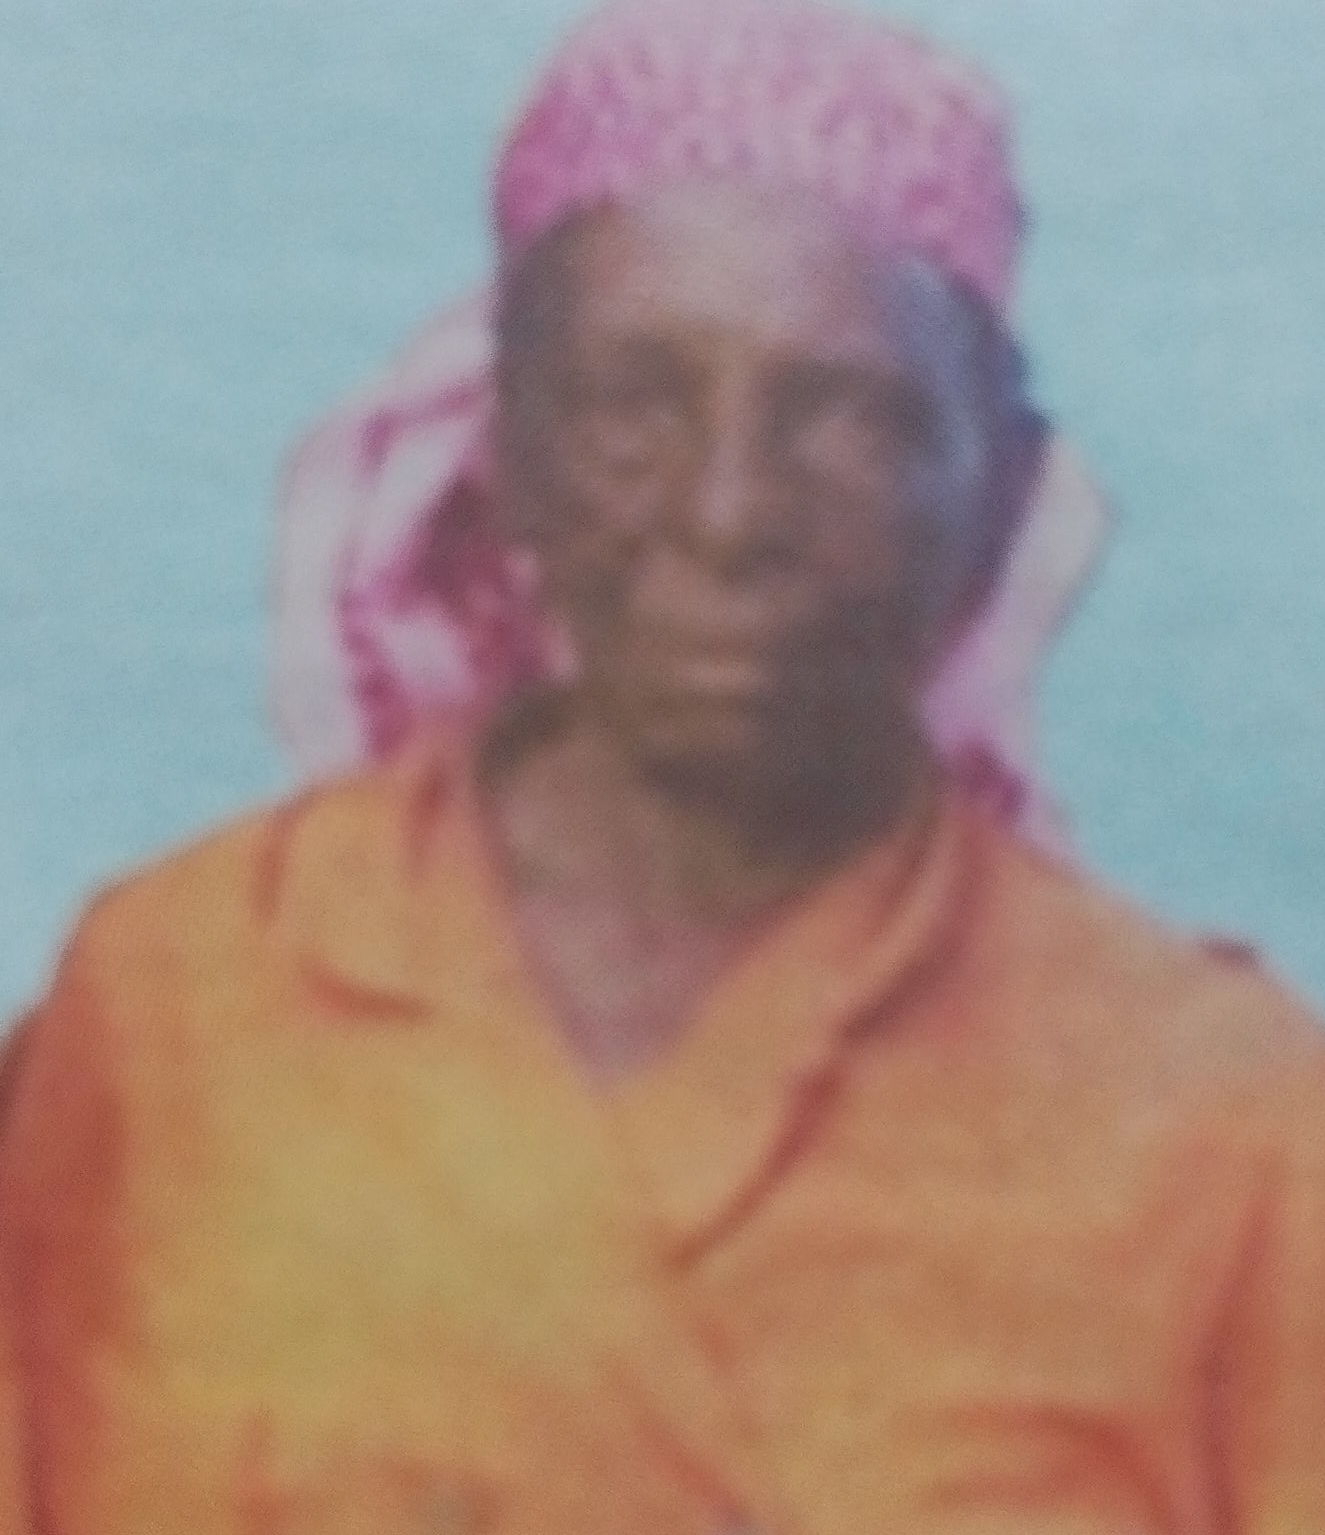 Obituary Image of Esther Vavu Muanza